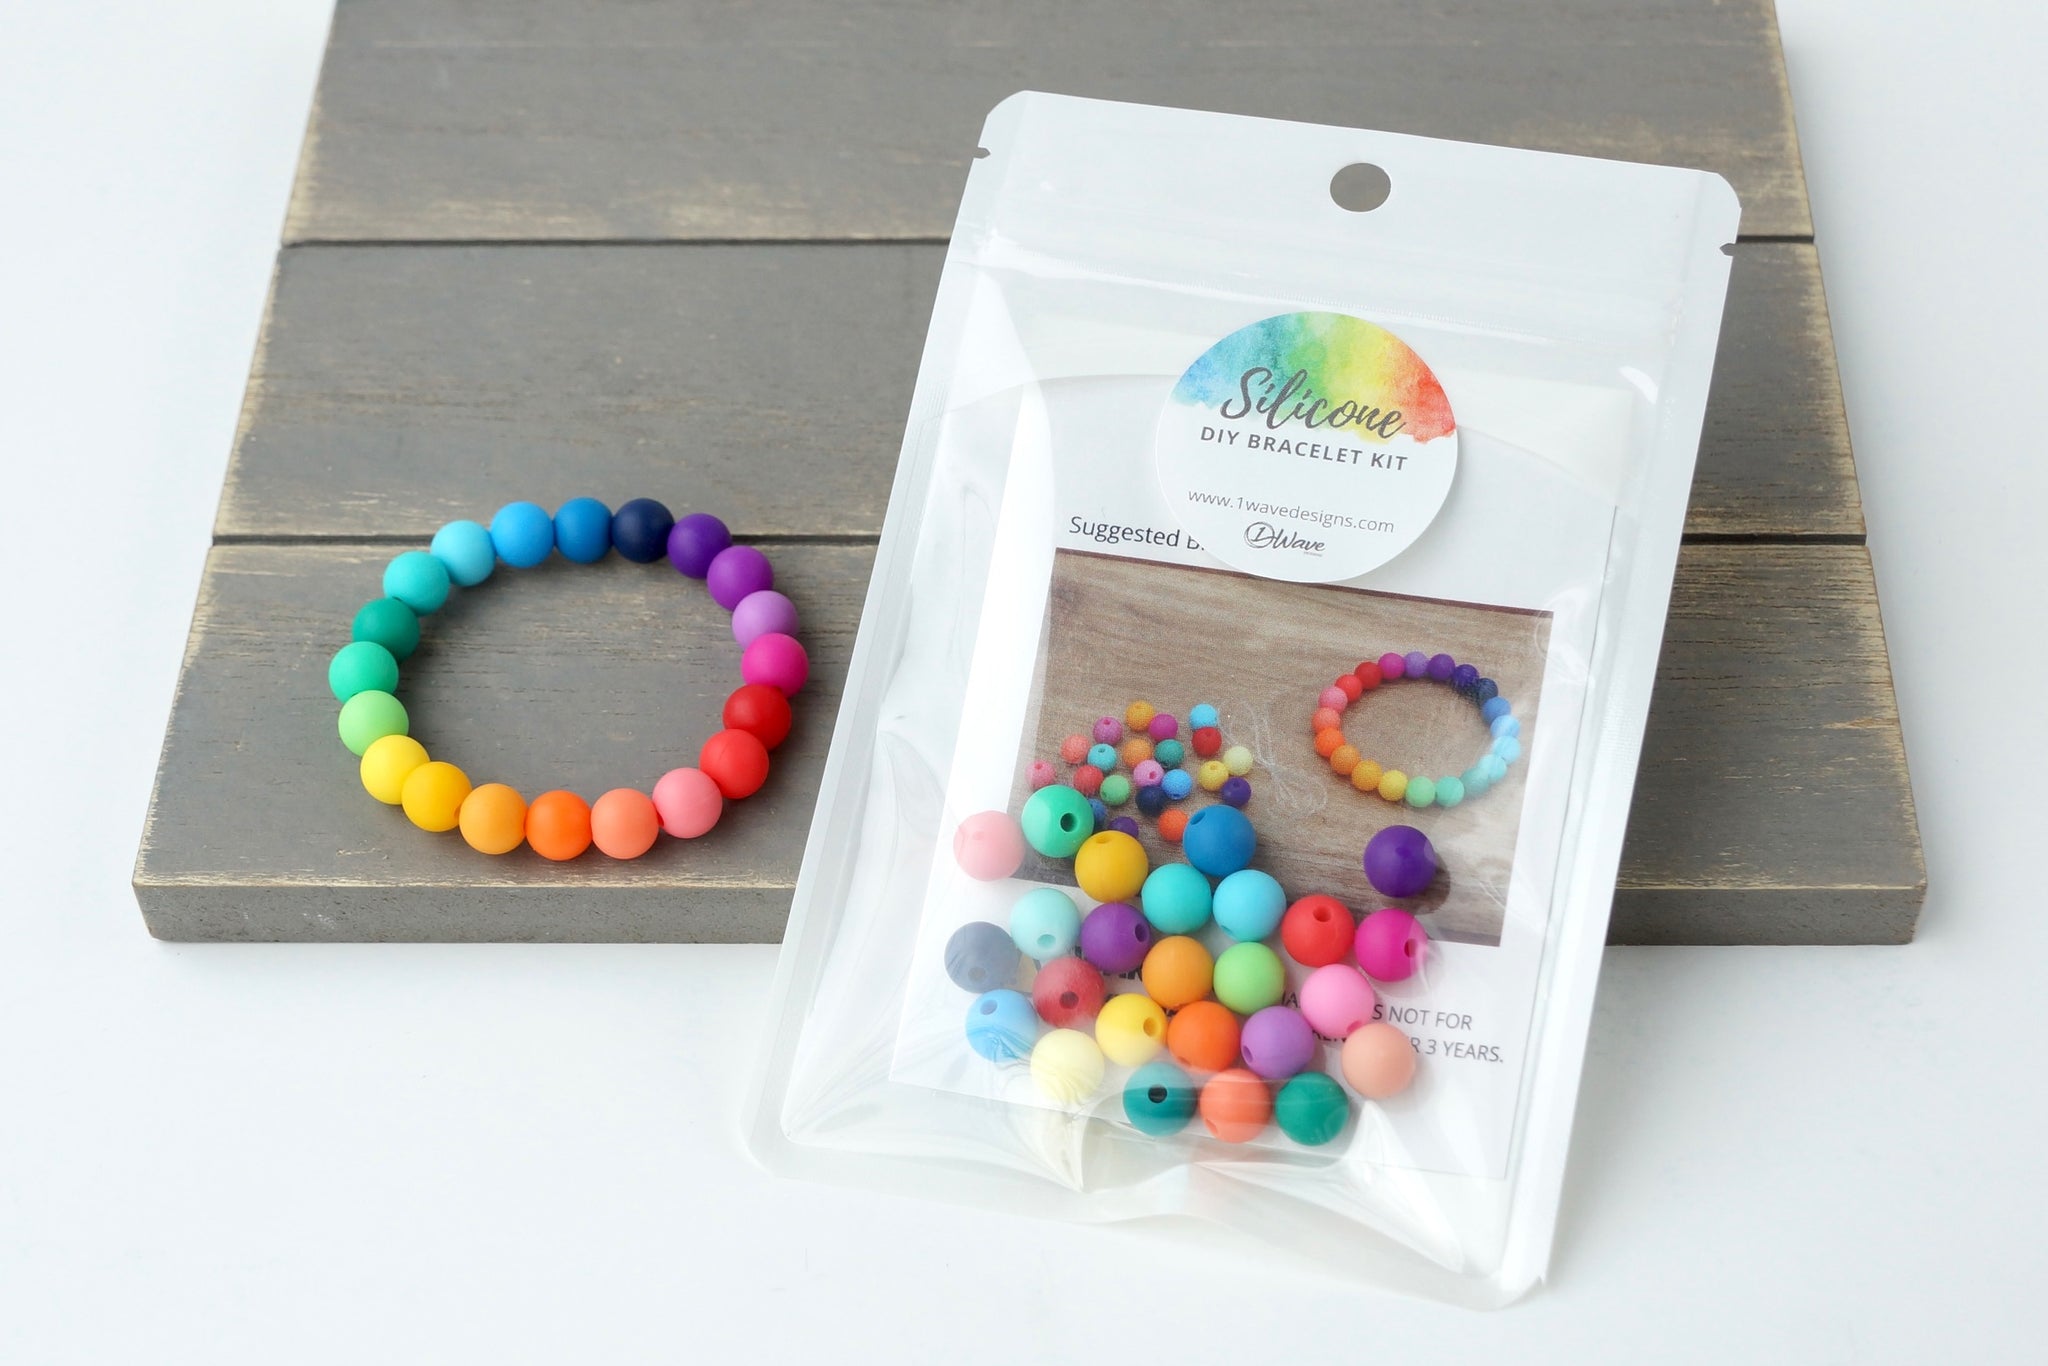 DIY Rainbow Bracelet Kit by 1 Wave Designs (1 kit)